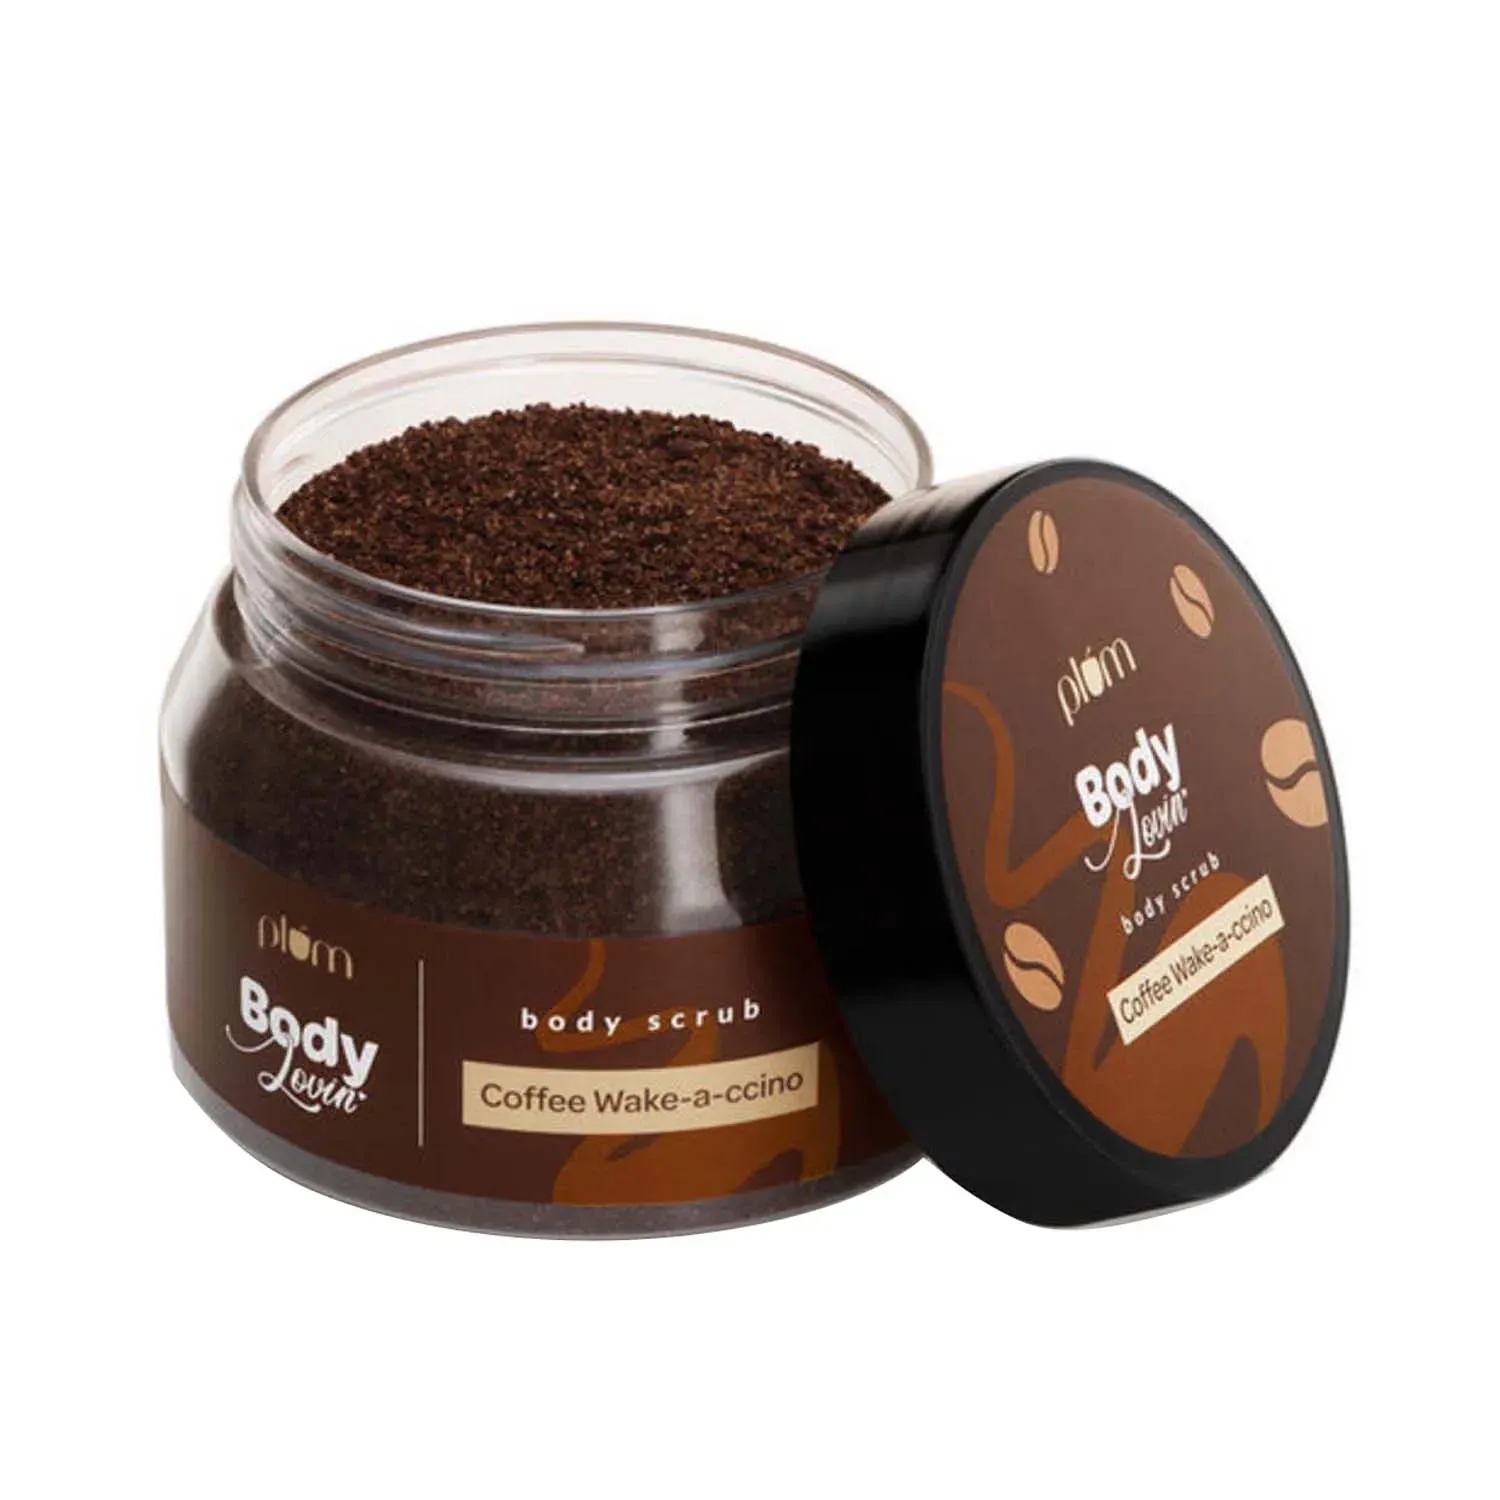 Plum | Plum Bodylovin' Coffee Wake-A-Ccino Body Scrub - (100g)